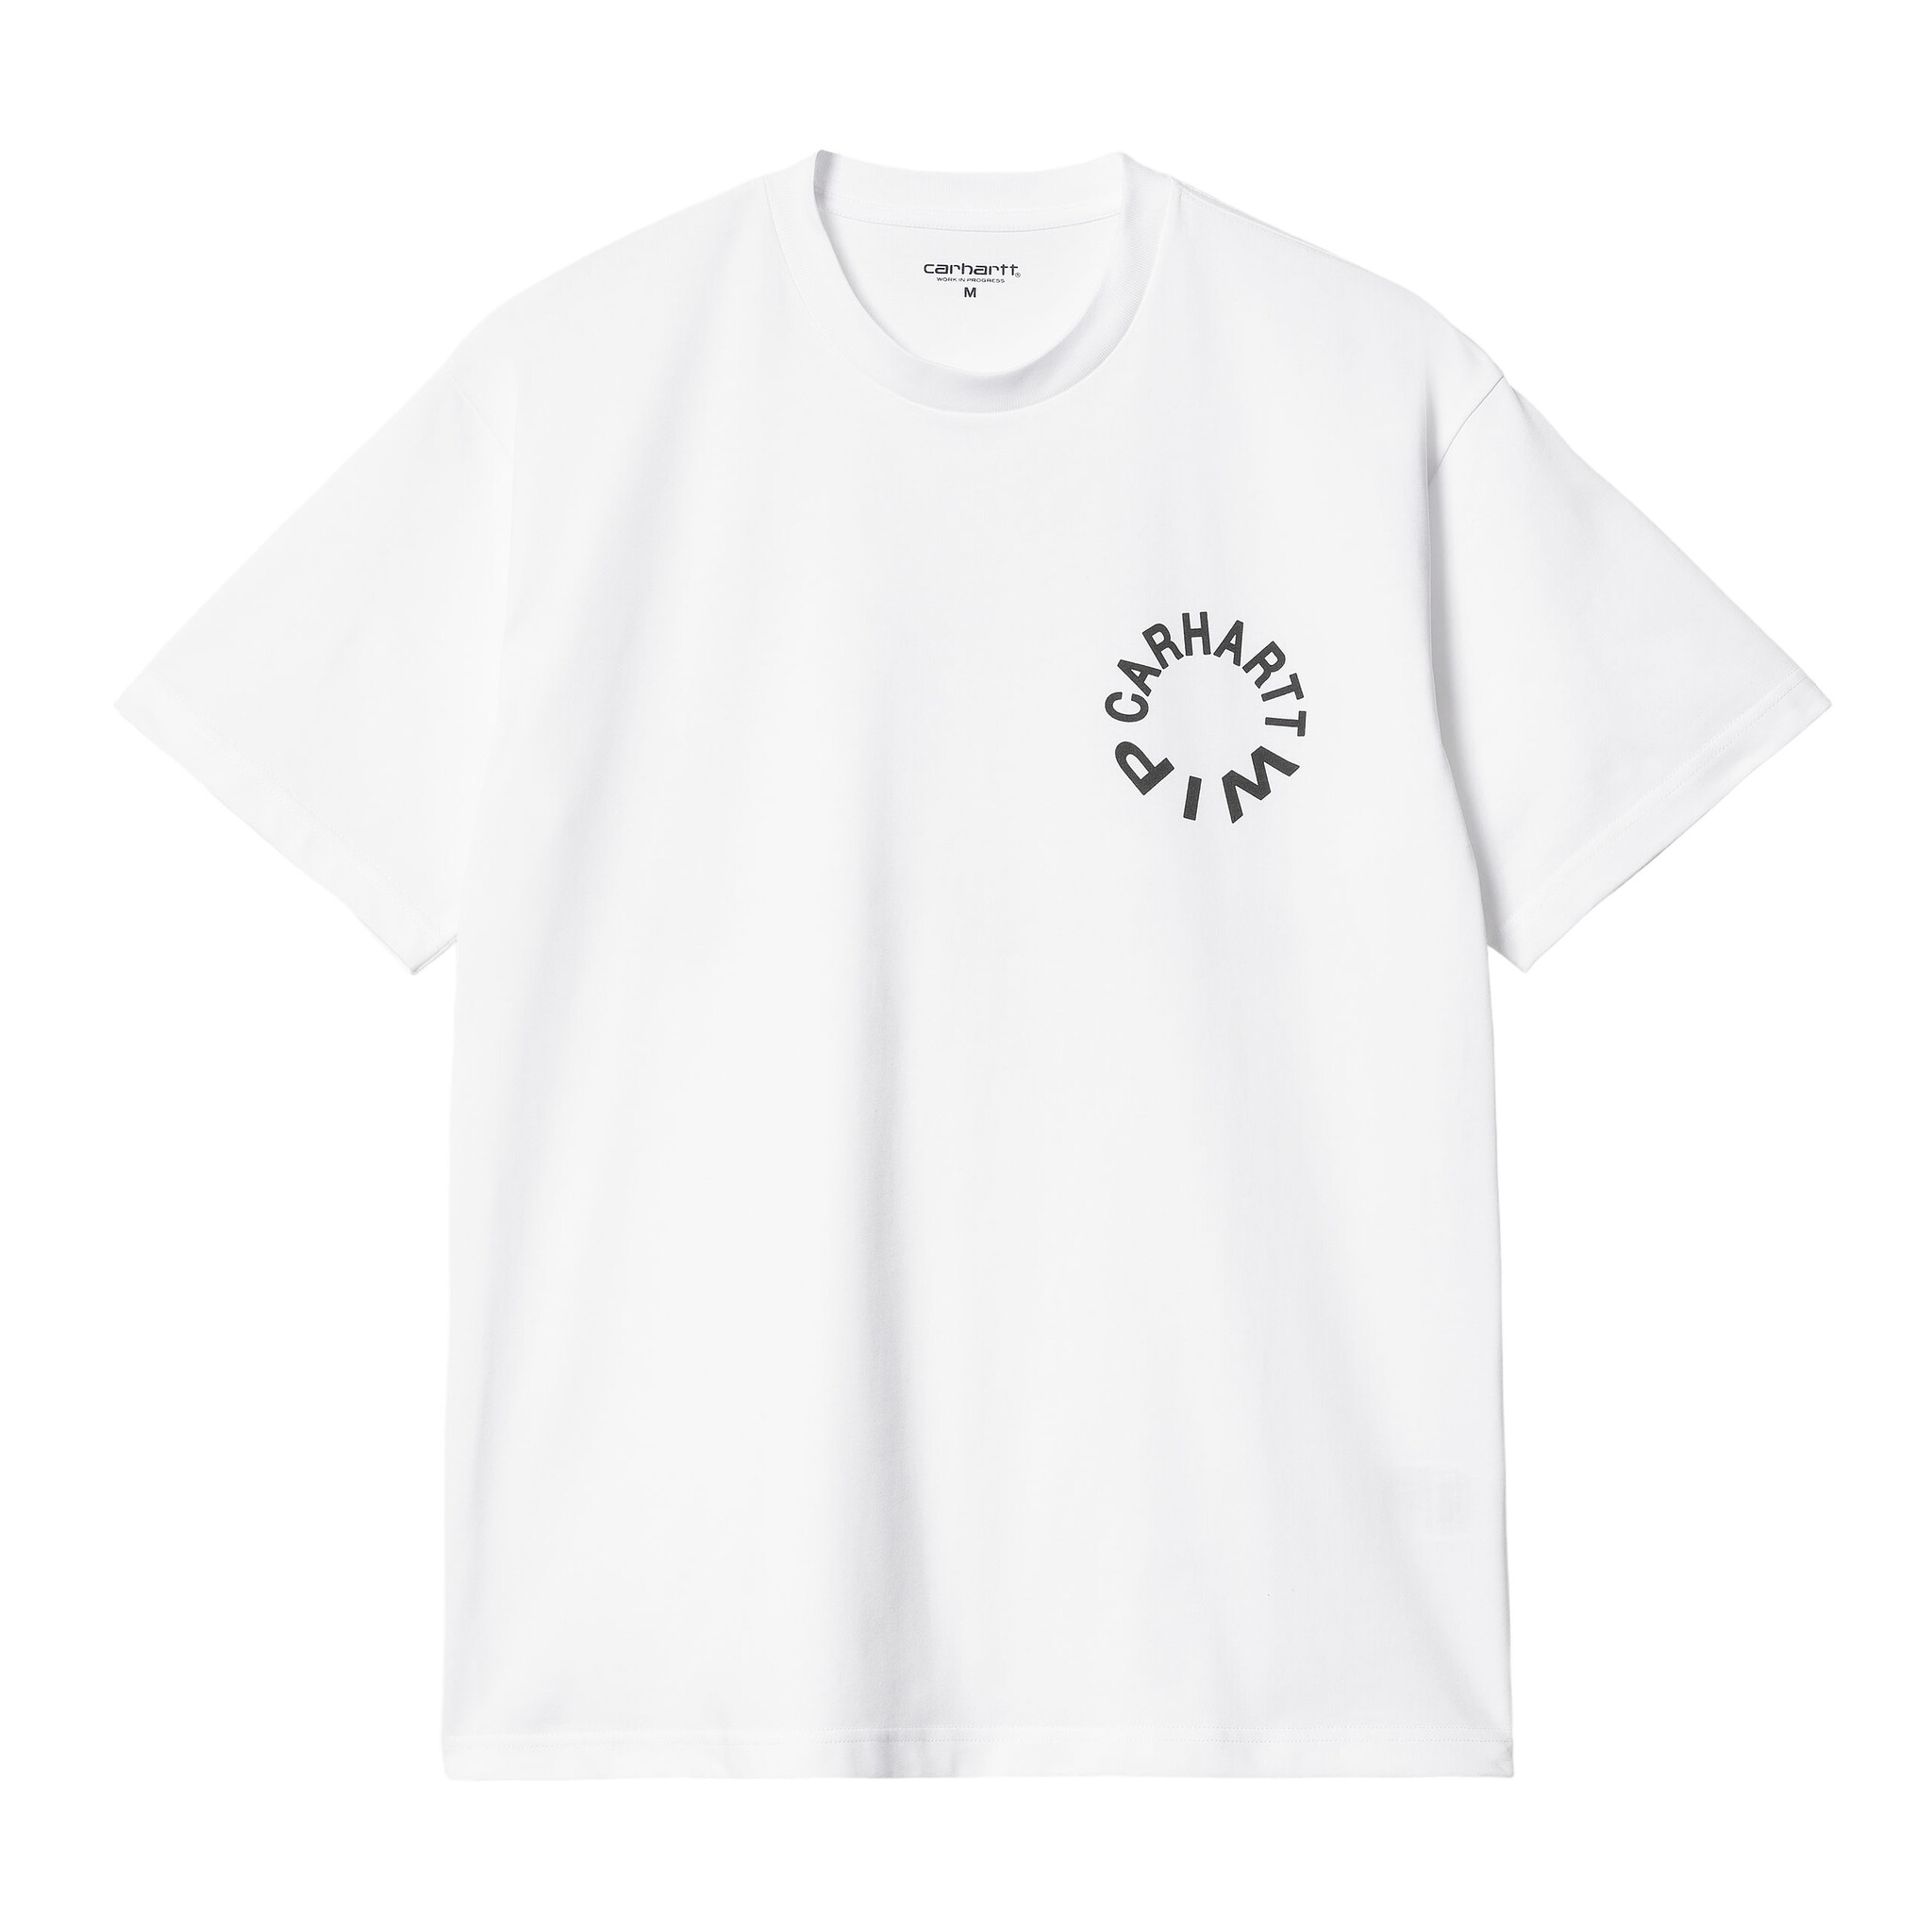 Carhartt WIP S/S Works Varsity T-Shirt - White/Black